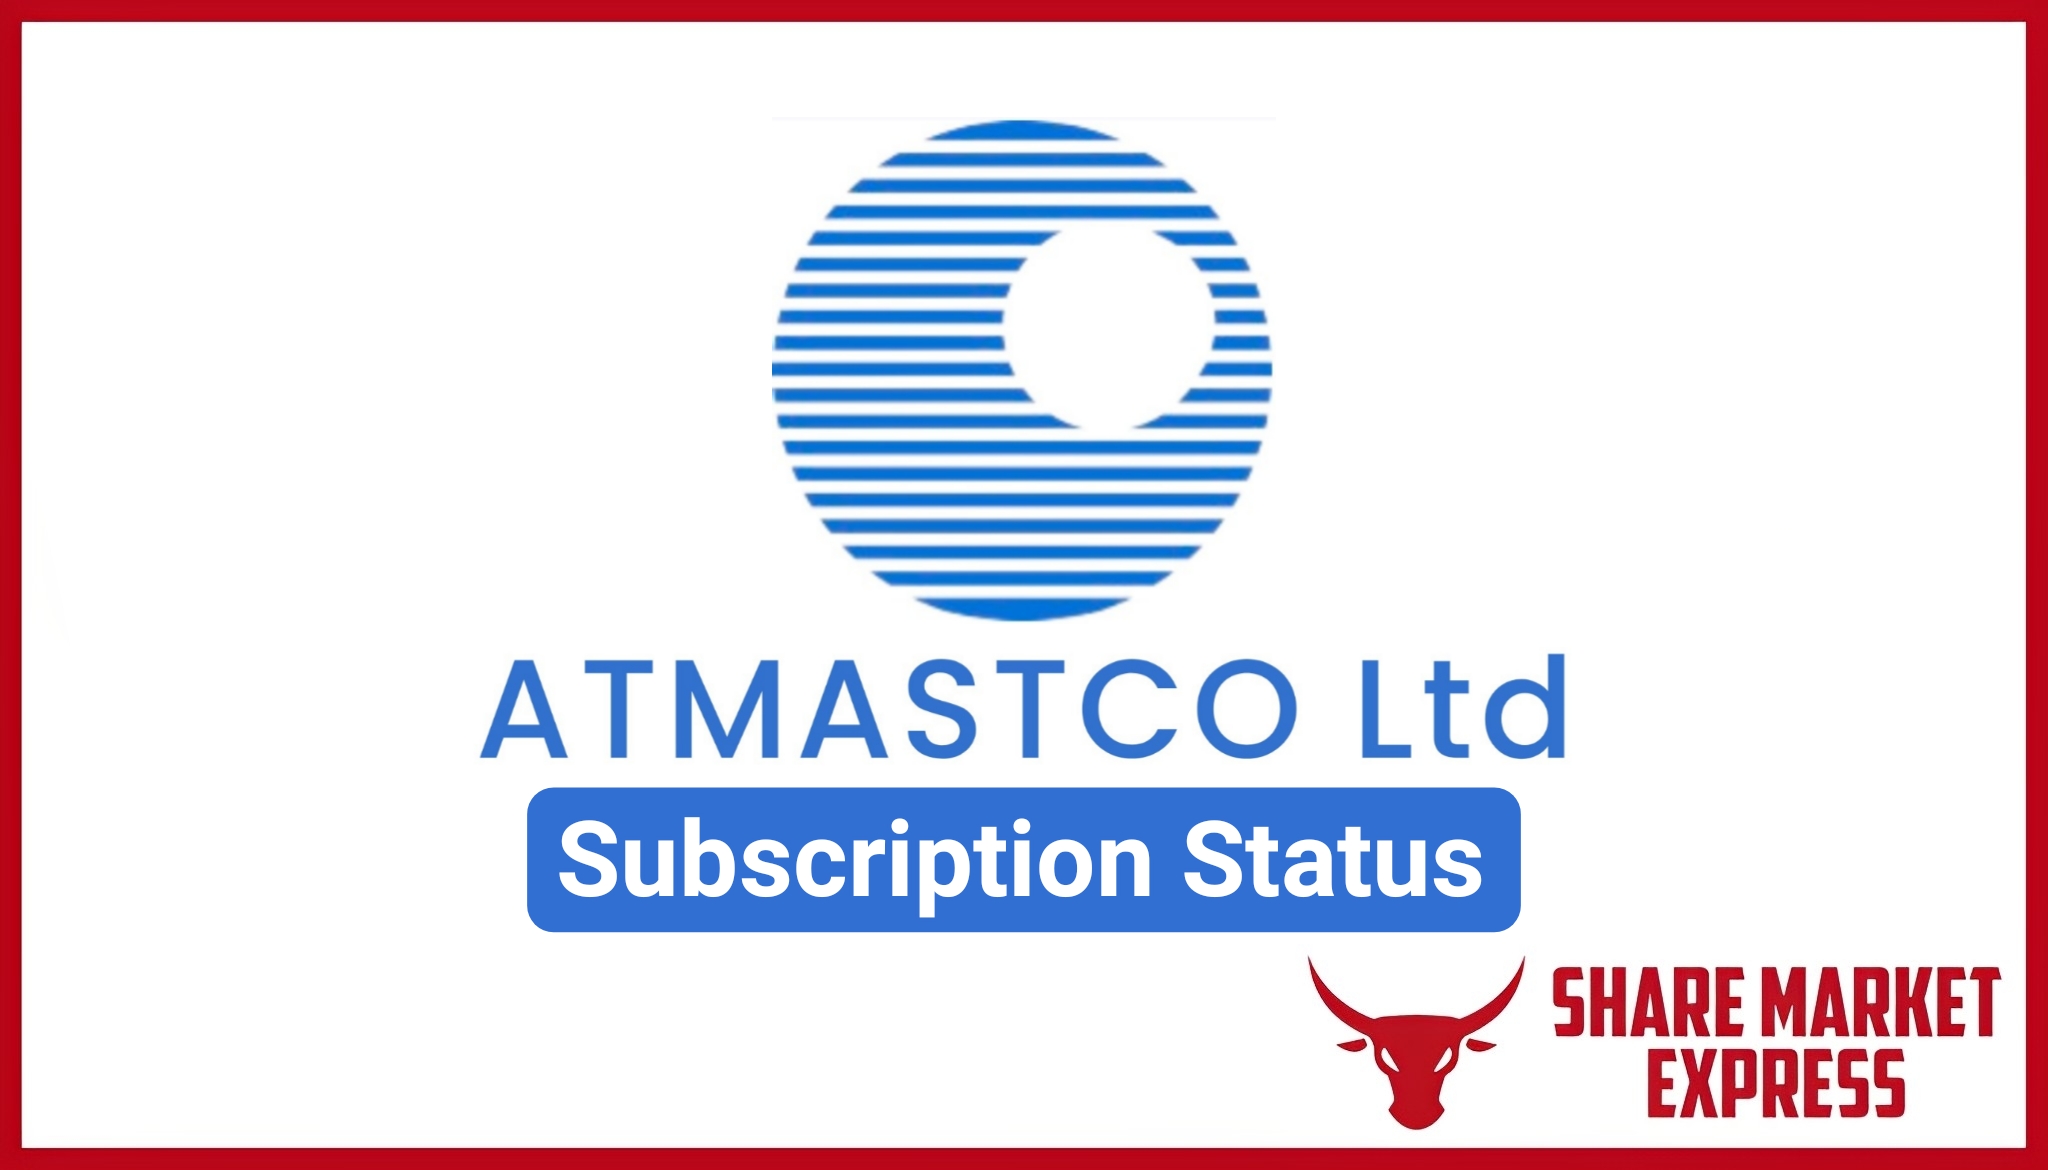 Atmastco IPO Subscription Status (Live Data)